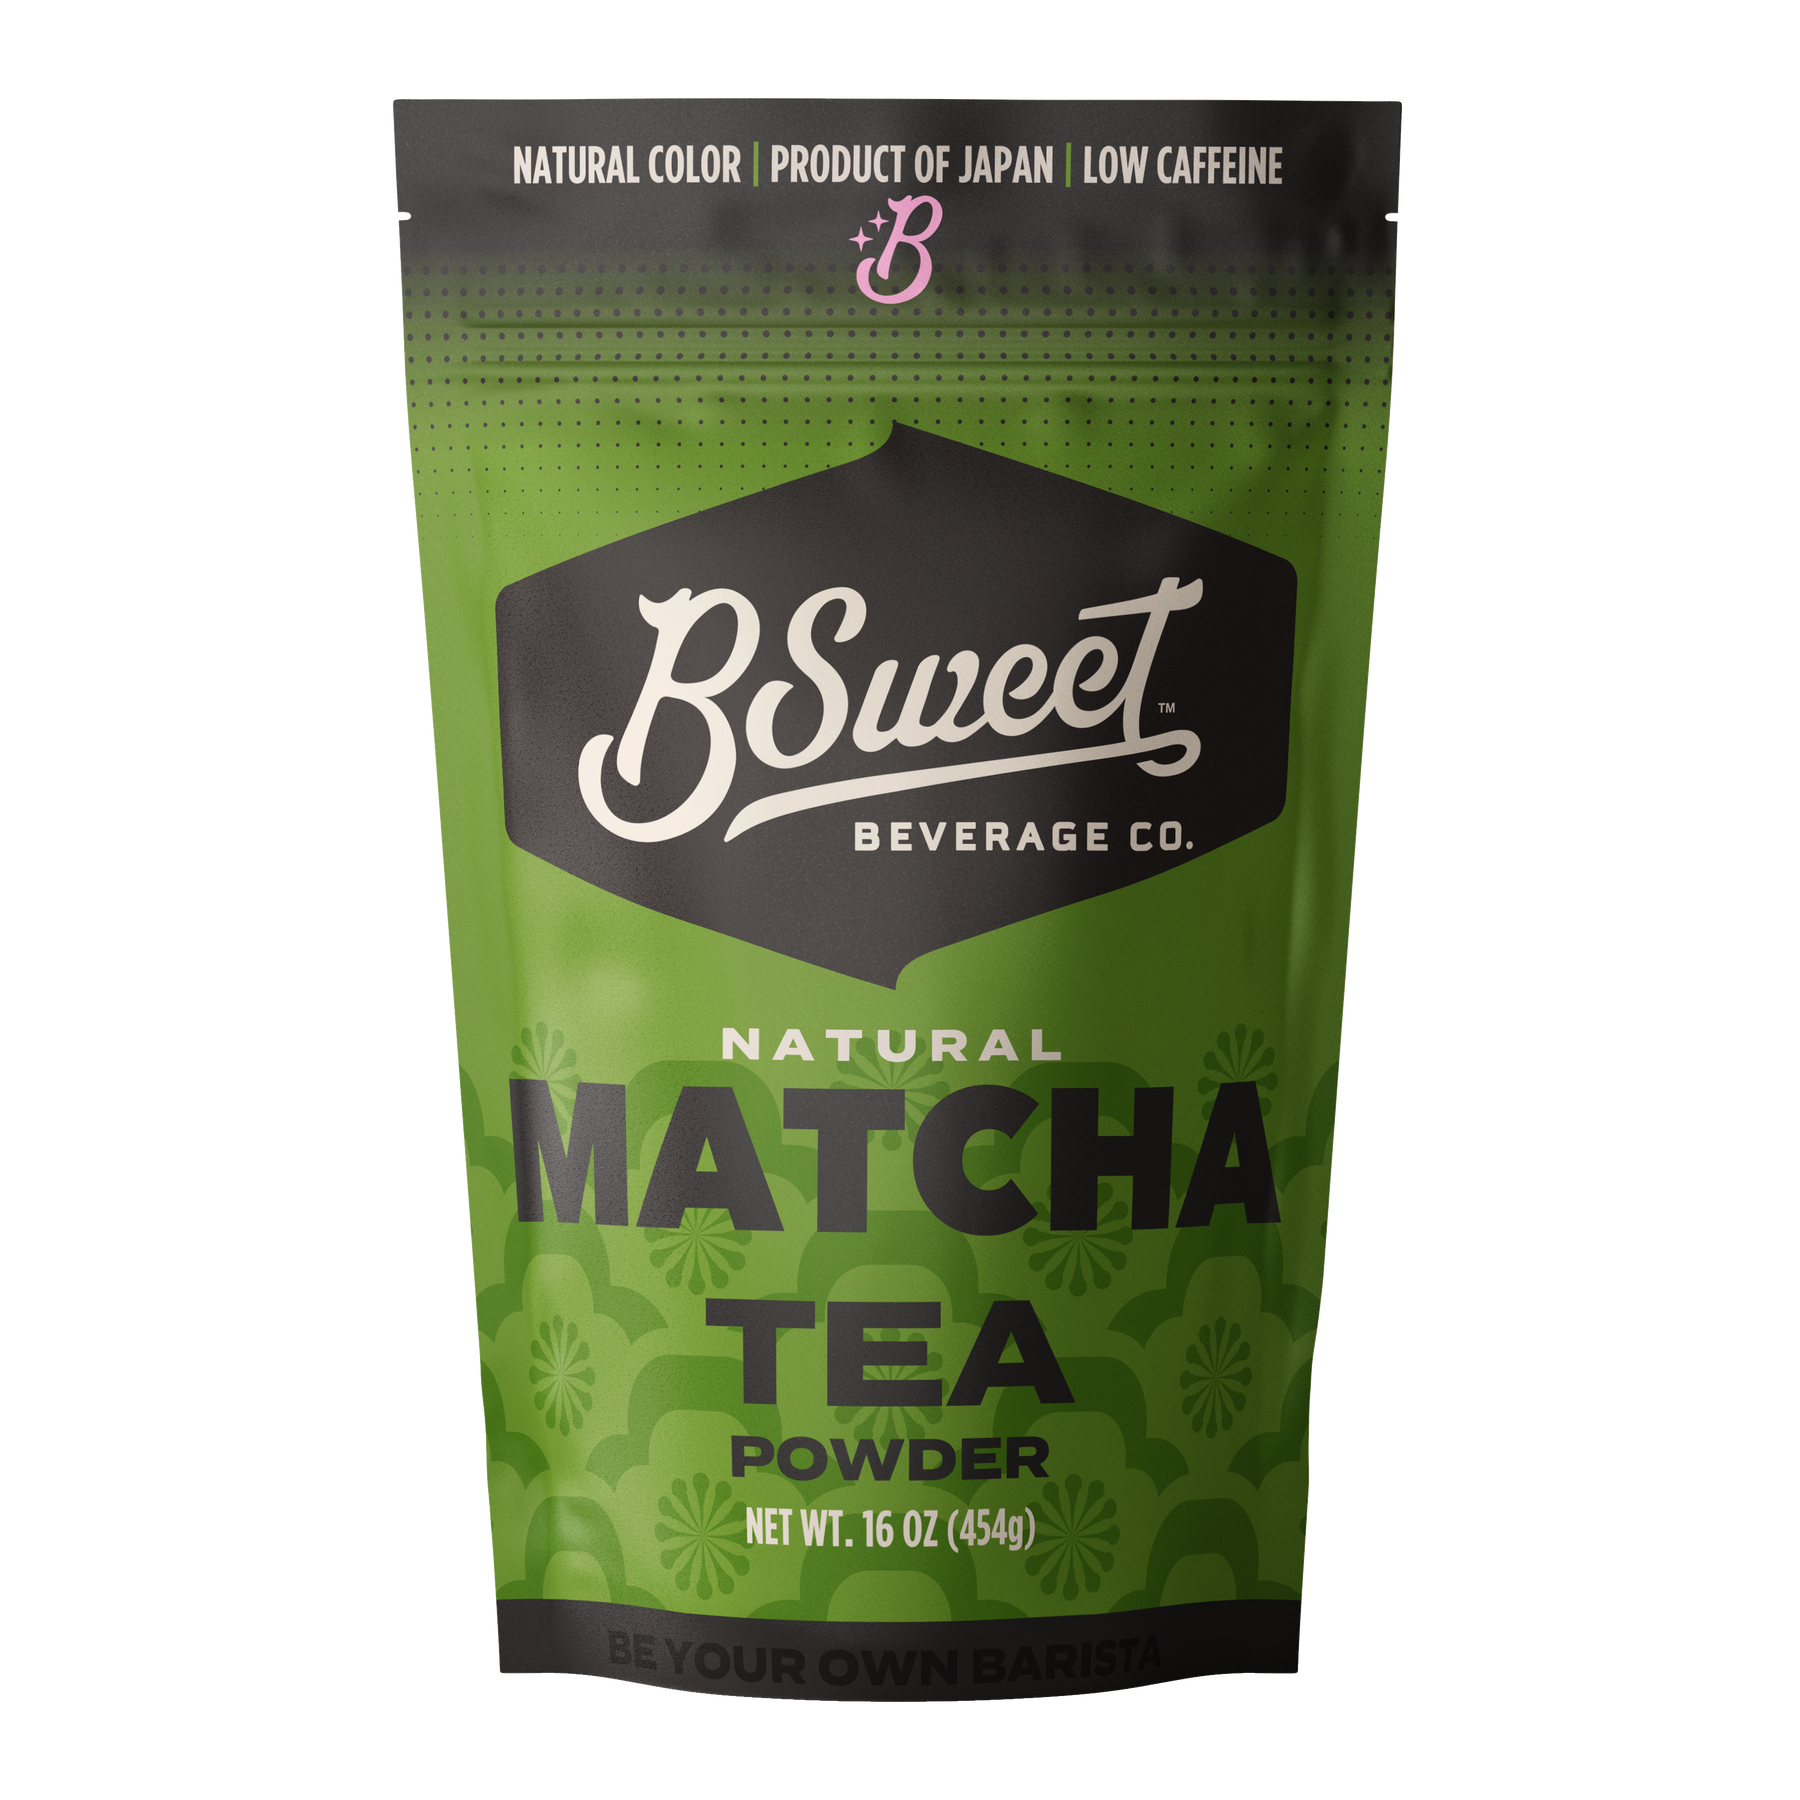 Matcha Green Tea - Powder Bag